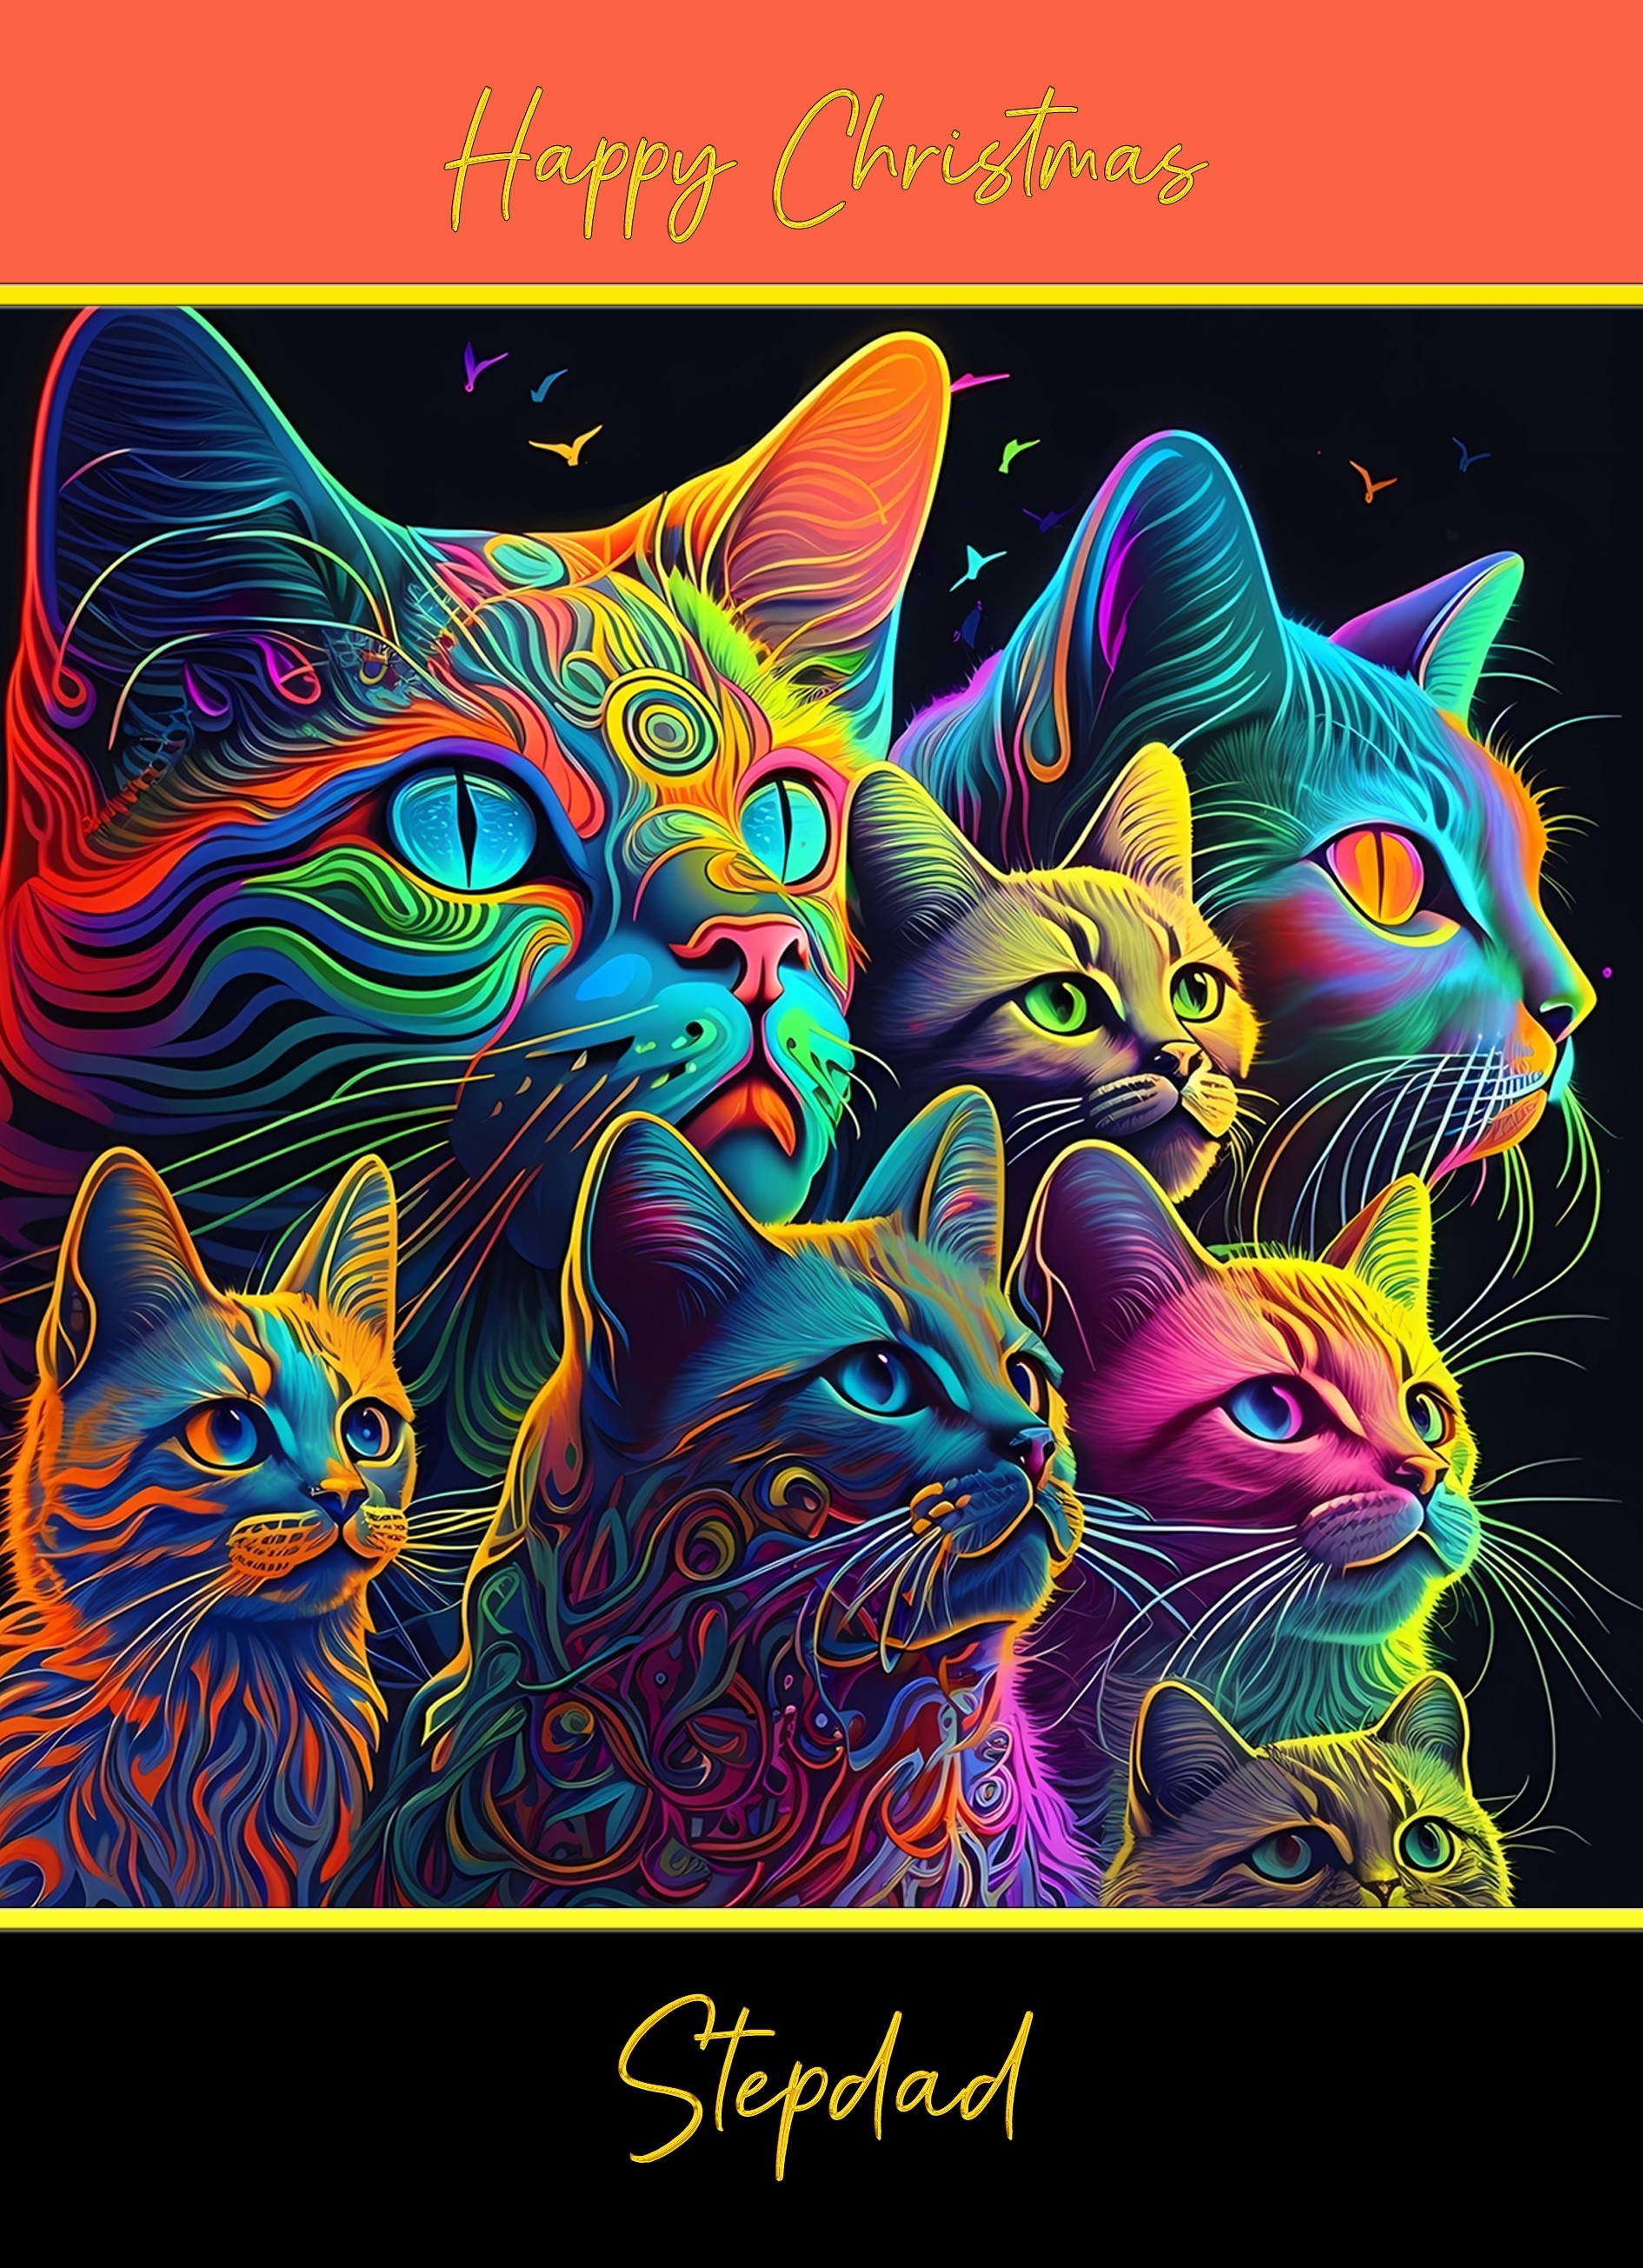 Christmas Card For Stepdad (Colourful Cat Art, Design 2)